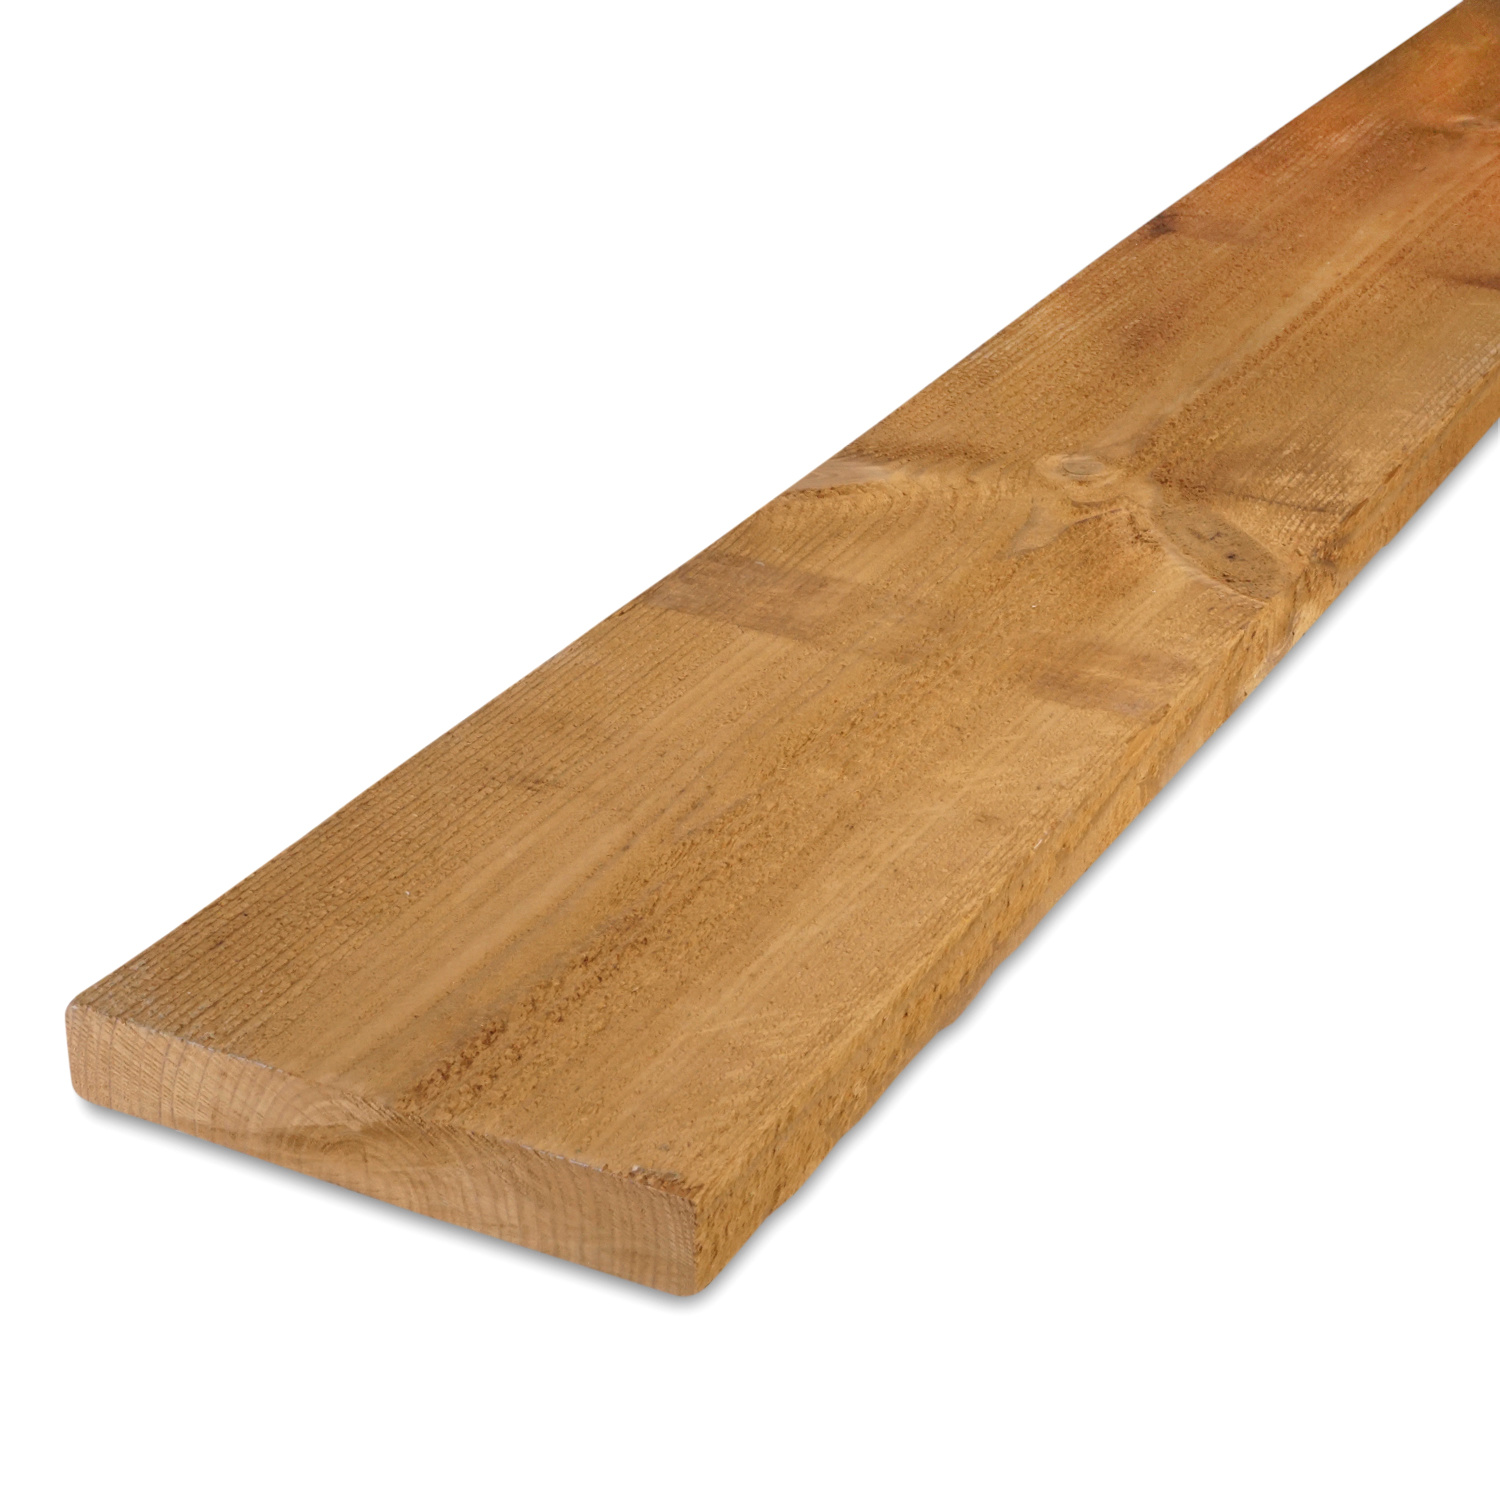 krab ginder efficiëntie Thermowood grenen plank 25x200mm - ruw thermo grenen kd (8-12%) | HOUTvakman